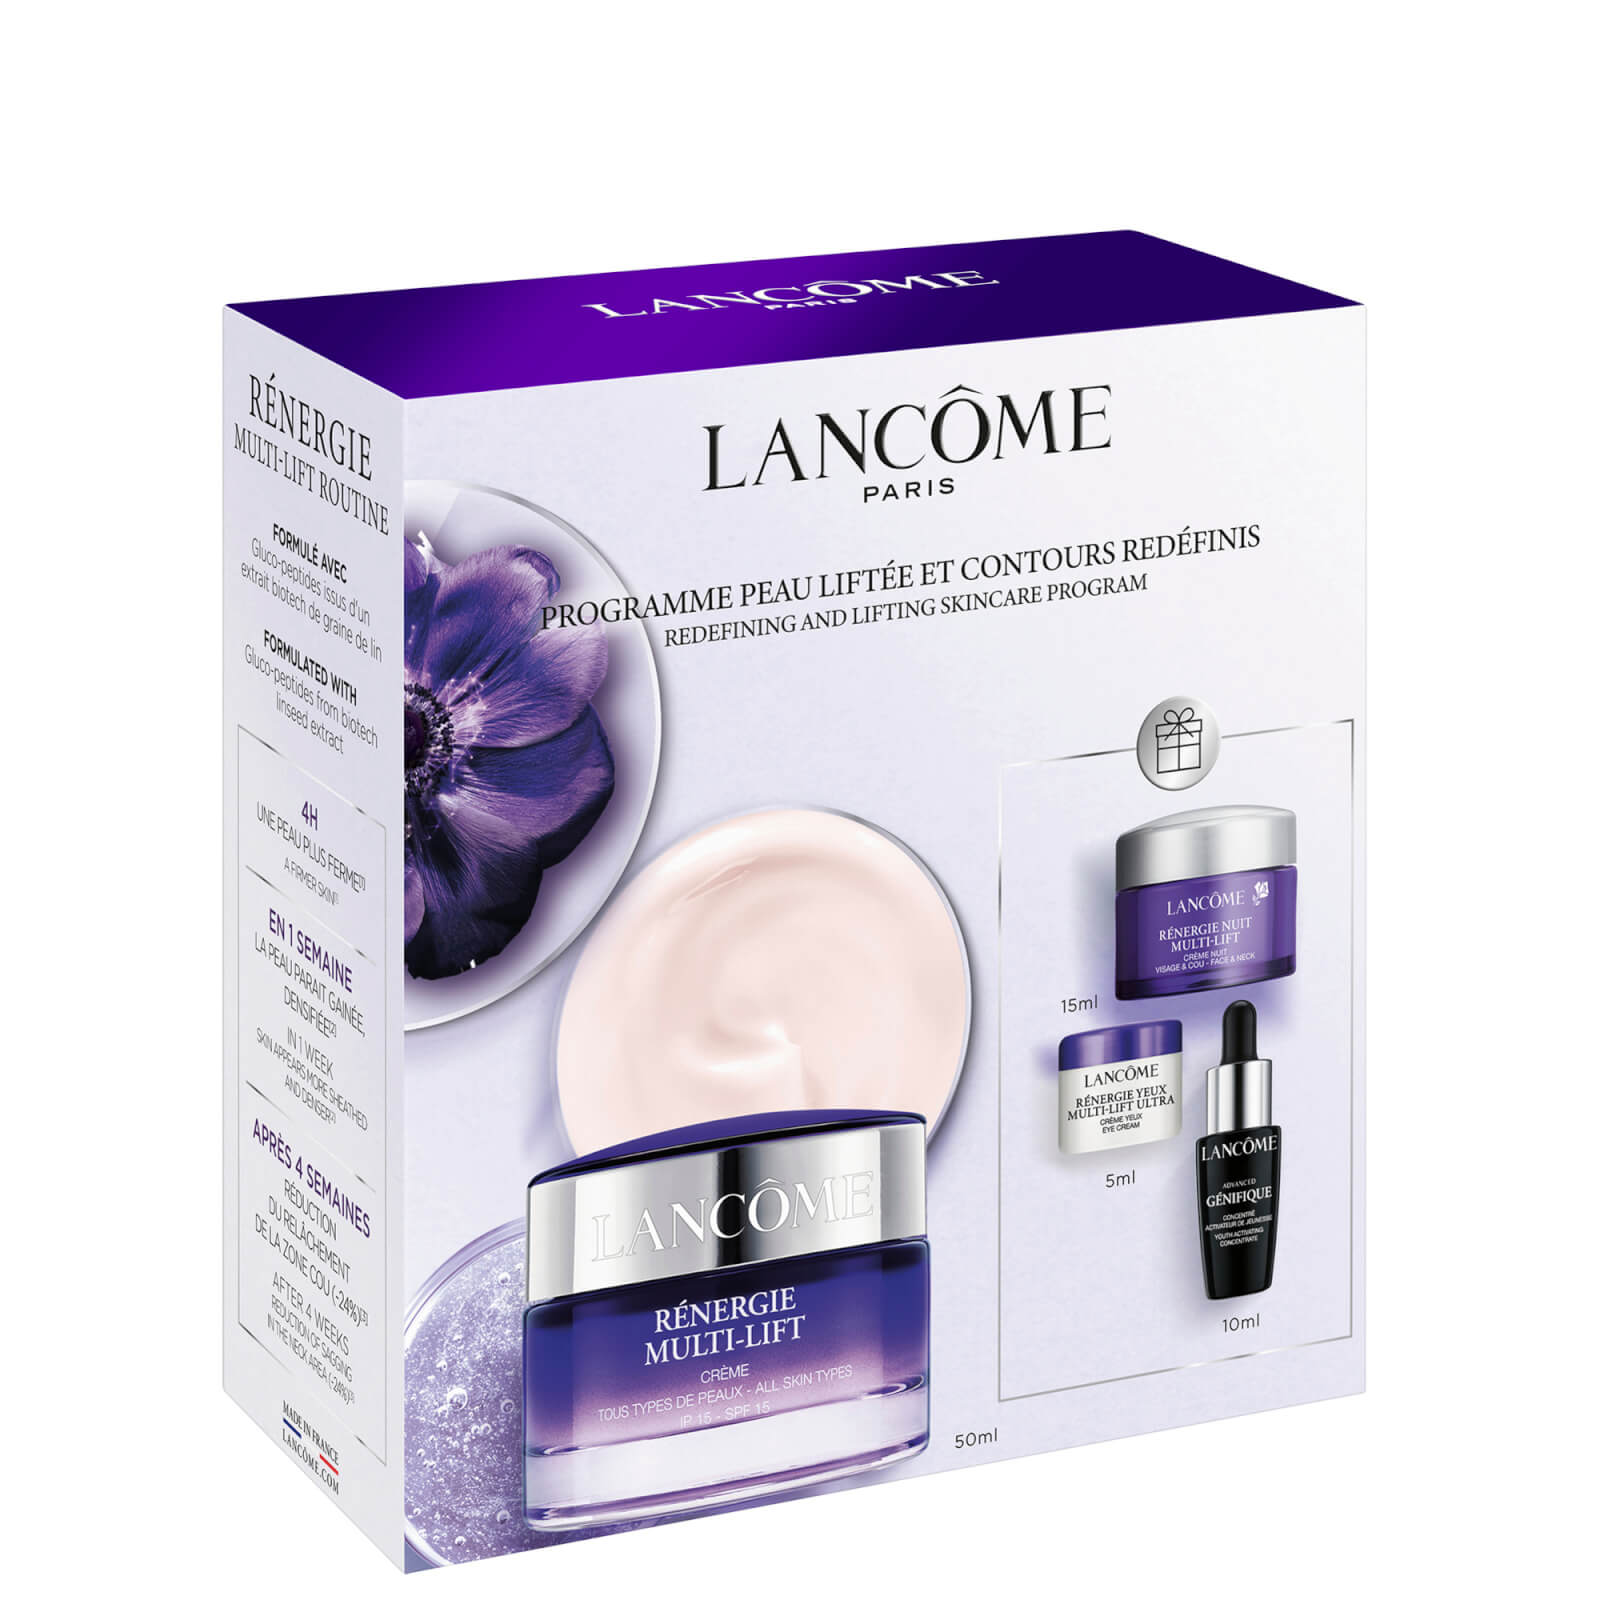 Lancome Renergie Multi Lift 50ml Skincare Gift Set